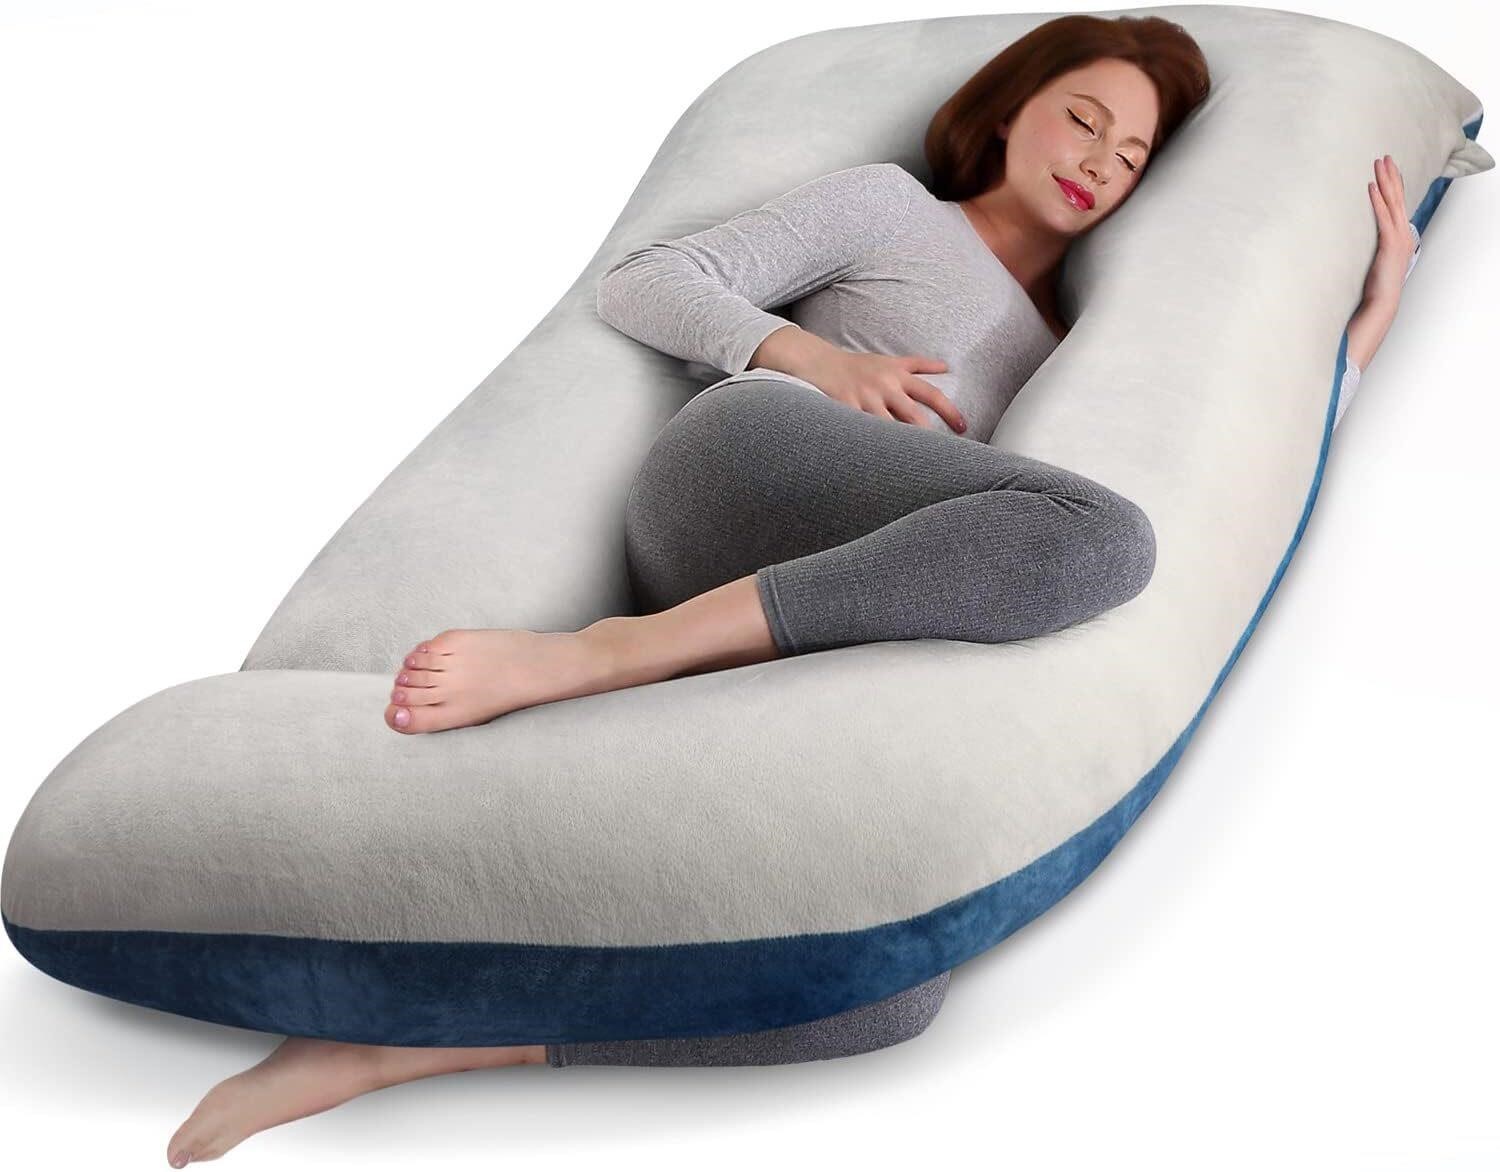 55in CauzyArt U-Shape Pregnancy Pillow